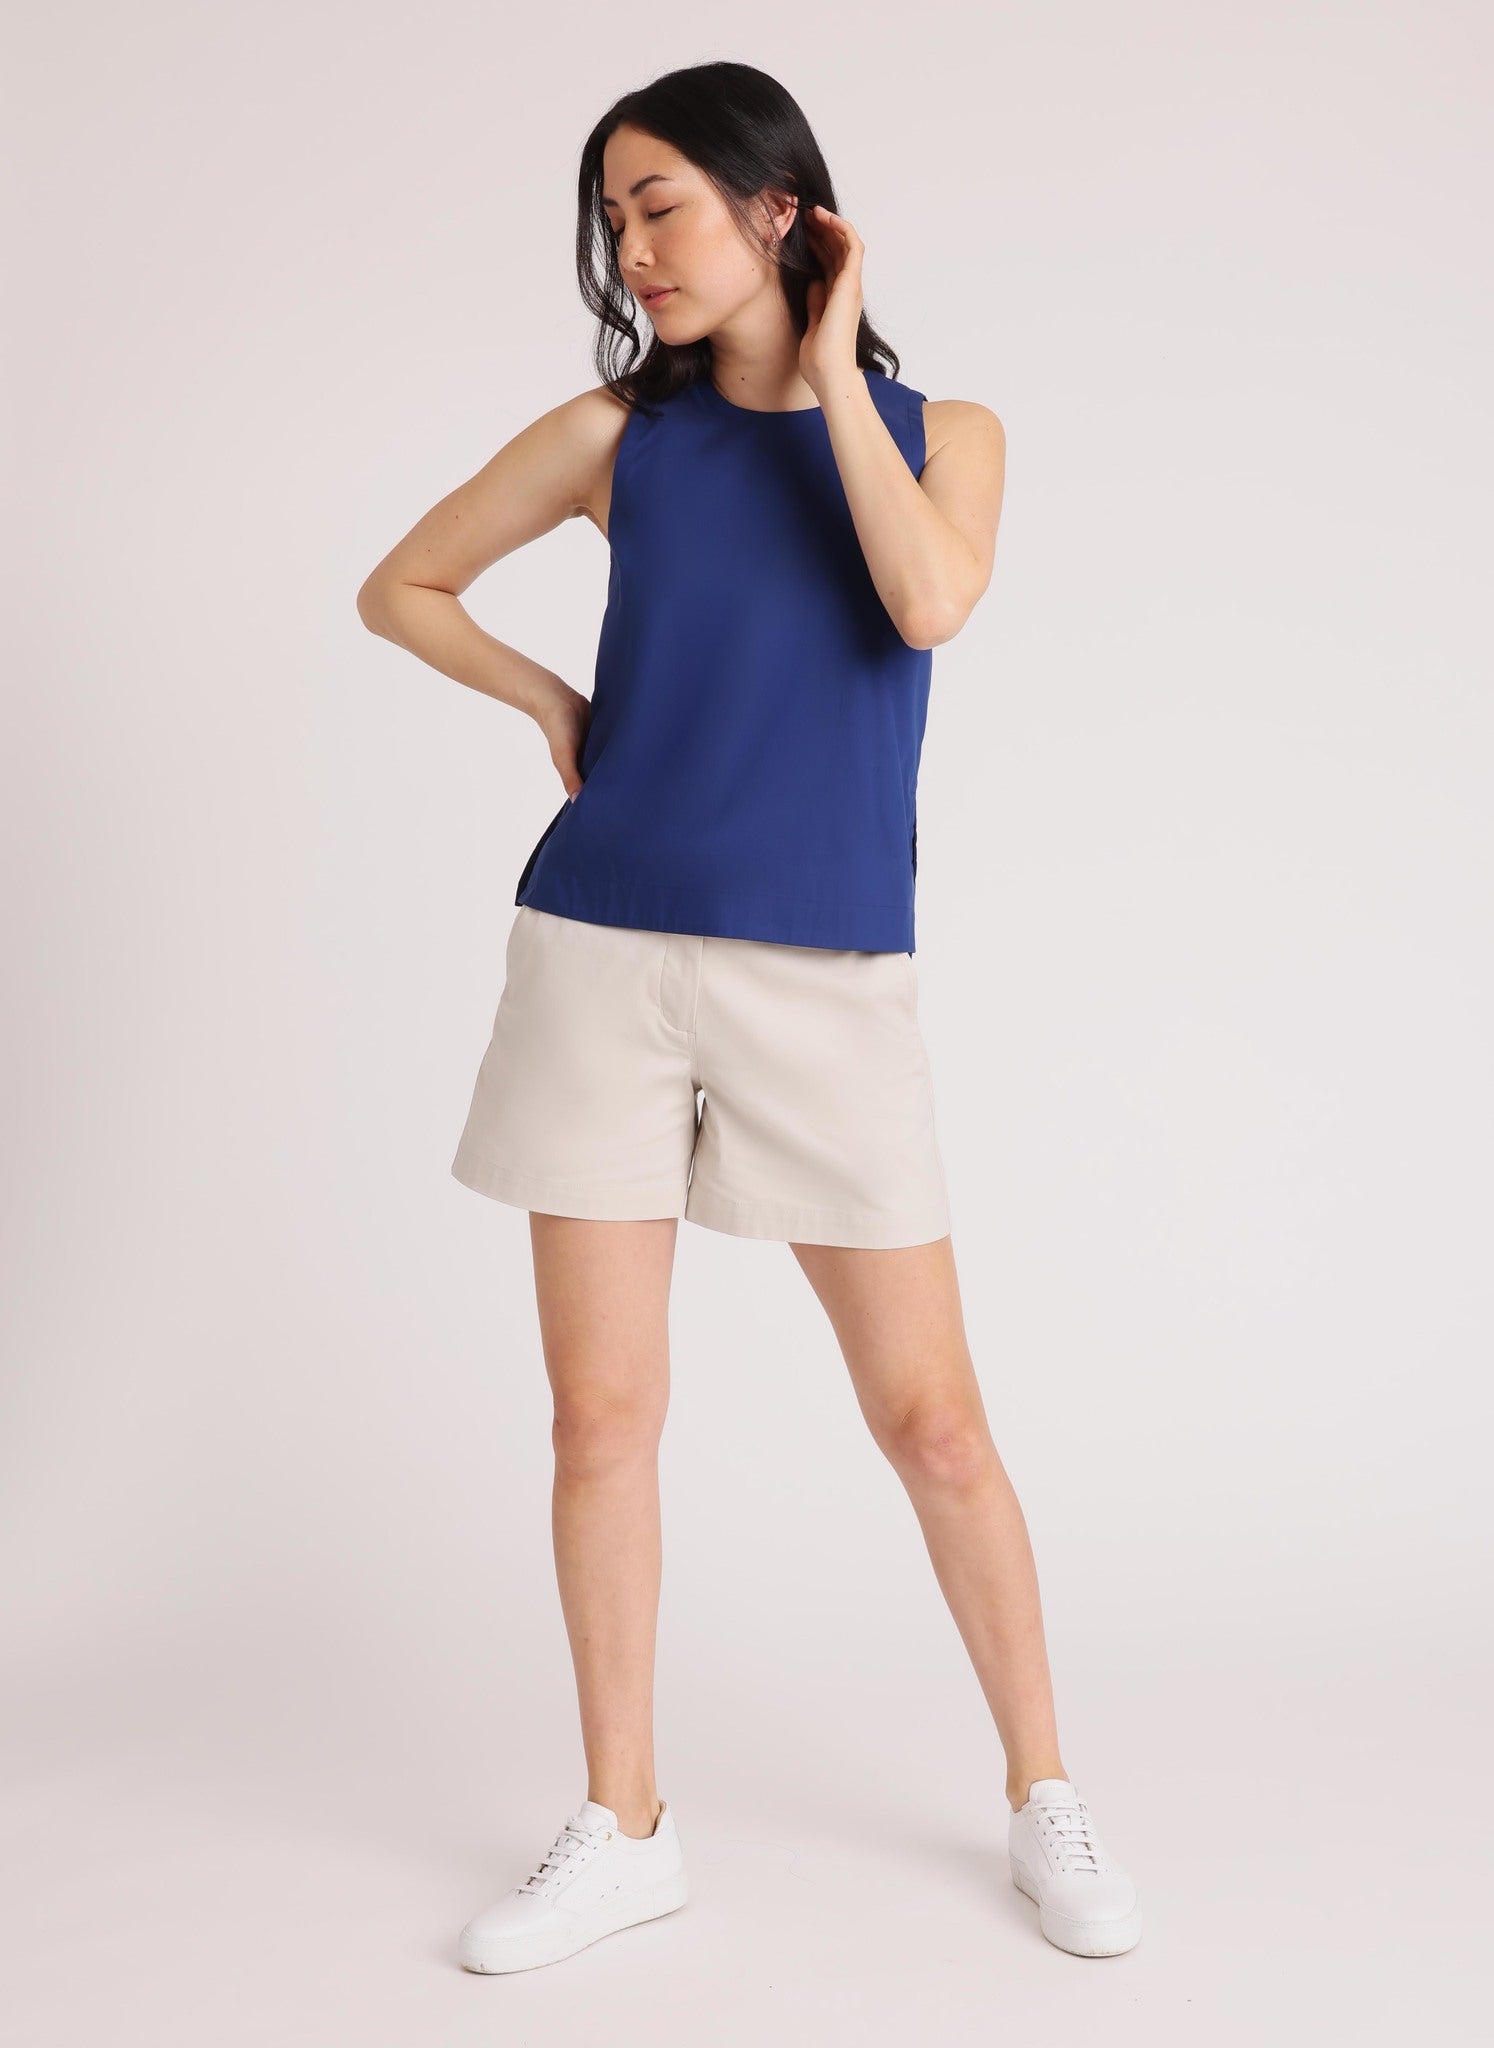 Kit and Ace — Keep It Cool Sleeveless Shirt